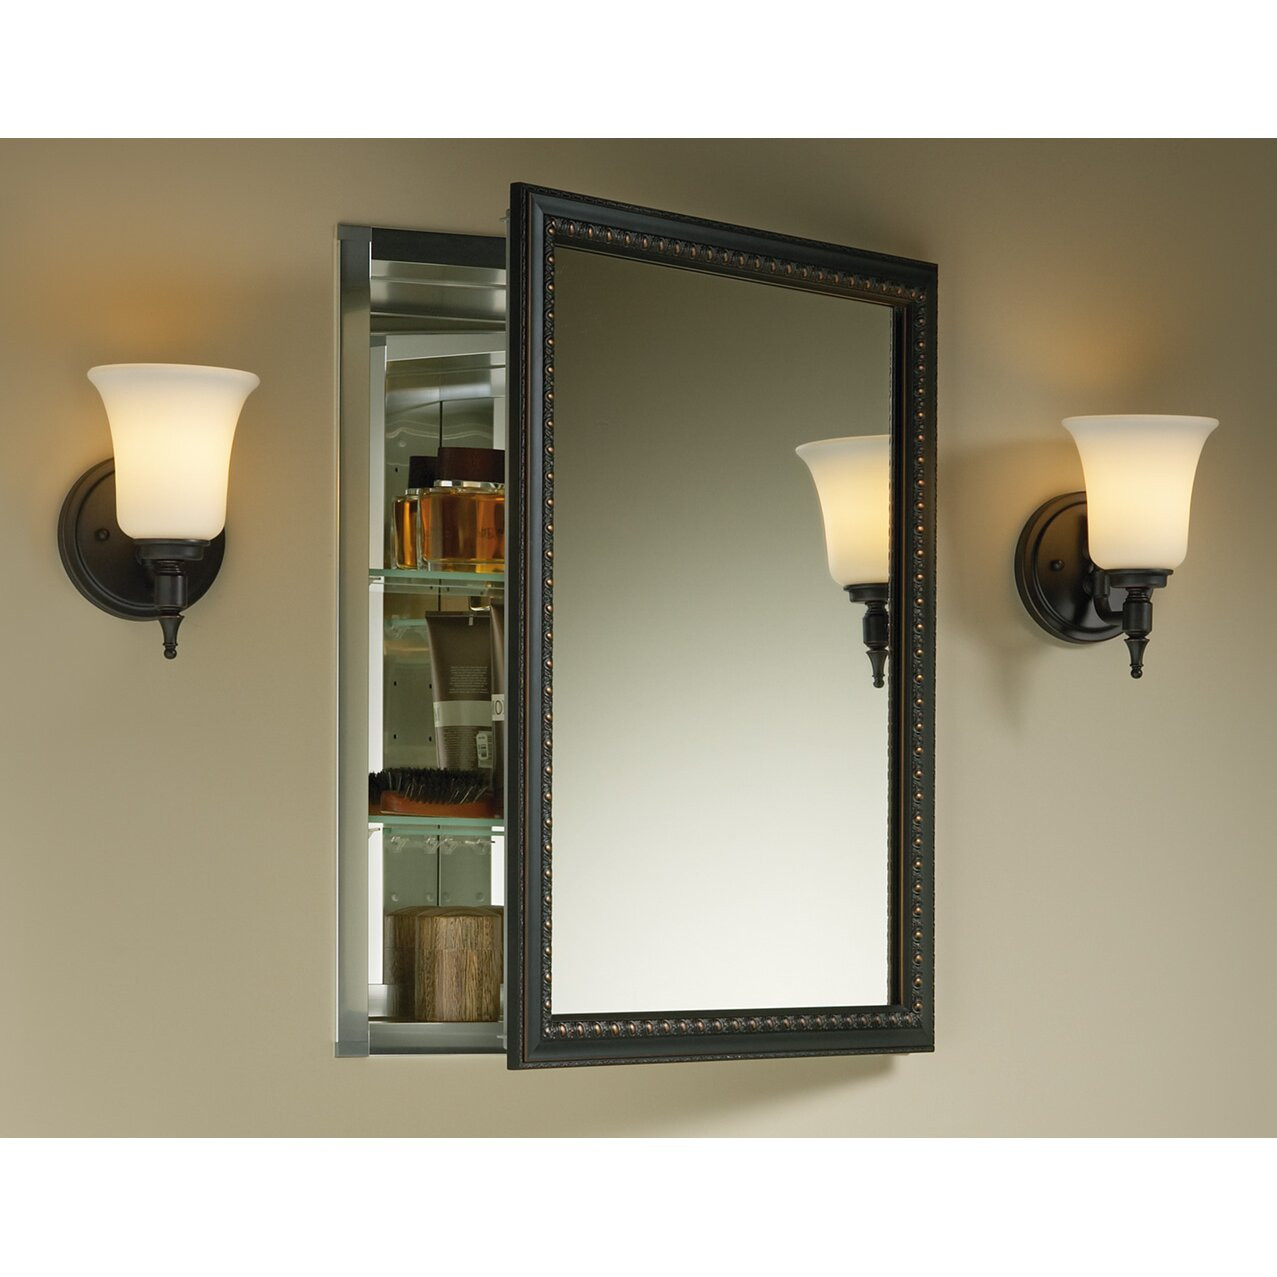 Kohler Bathroom Mirror Cabinet
 Kohler 20" x 26" Wall Mount Mirrored Medicine Cabinet with